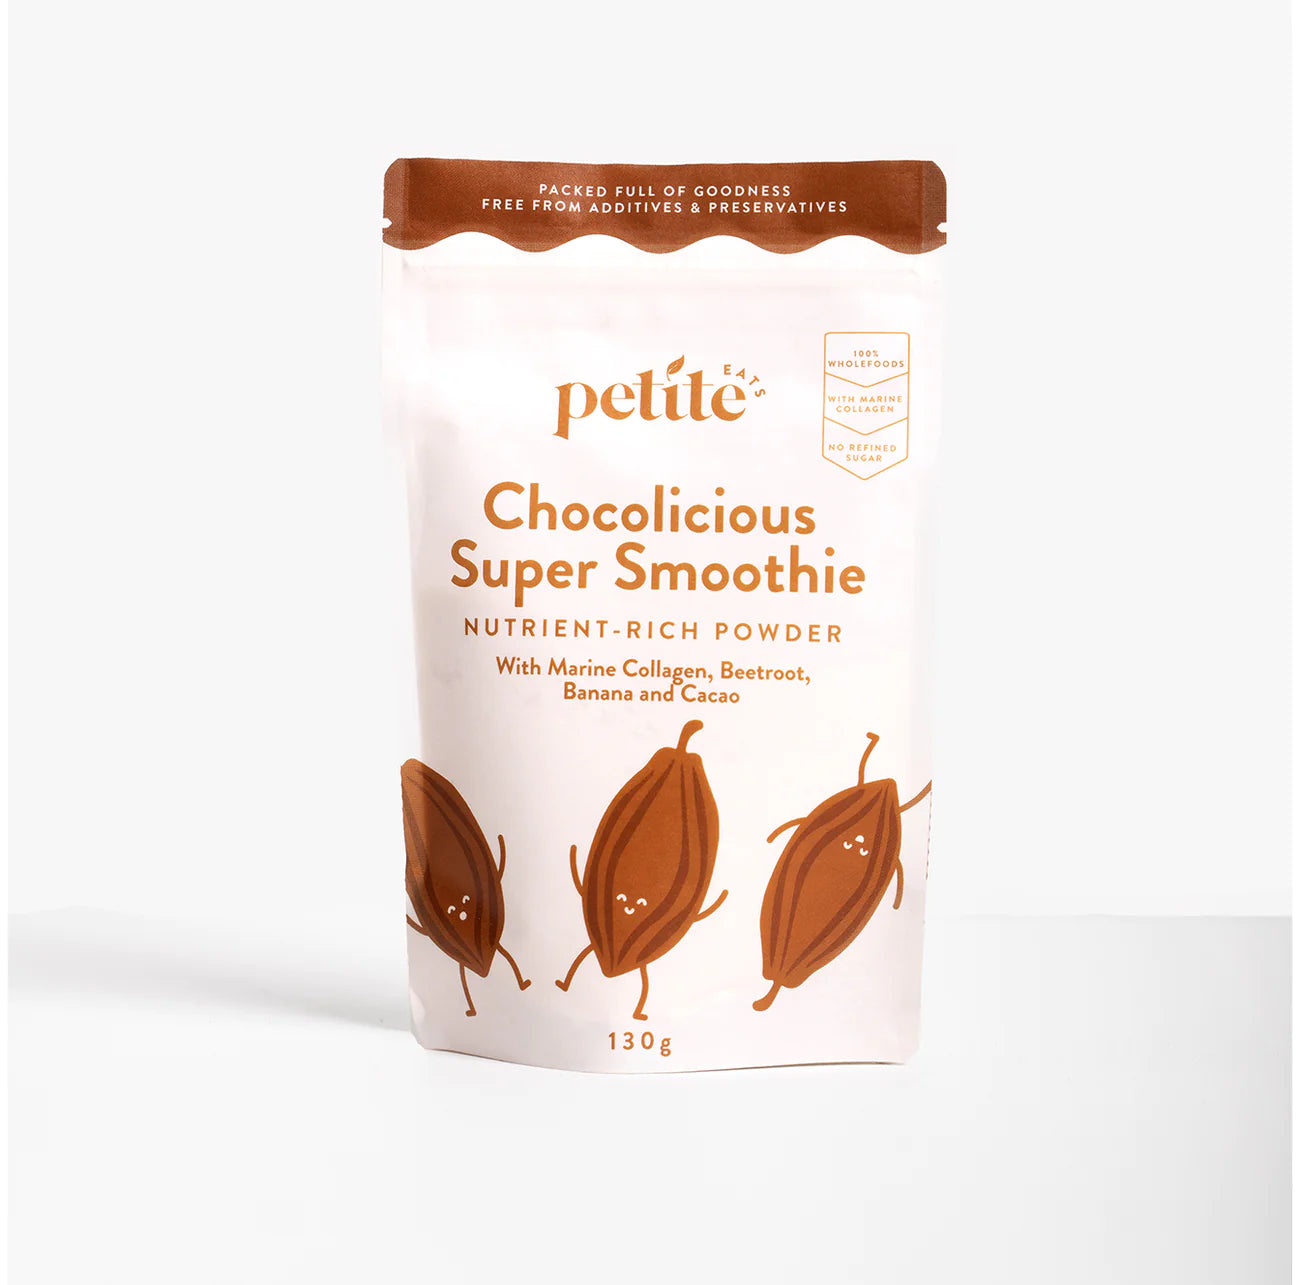 petite eats chocolicious superfood smoothie mix 130g